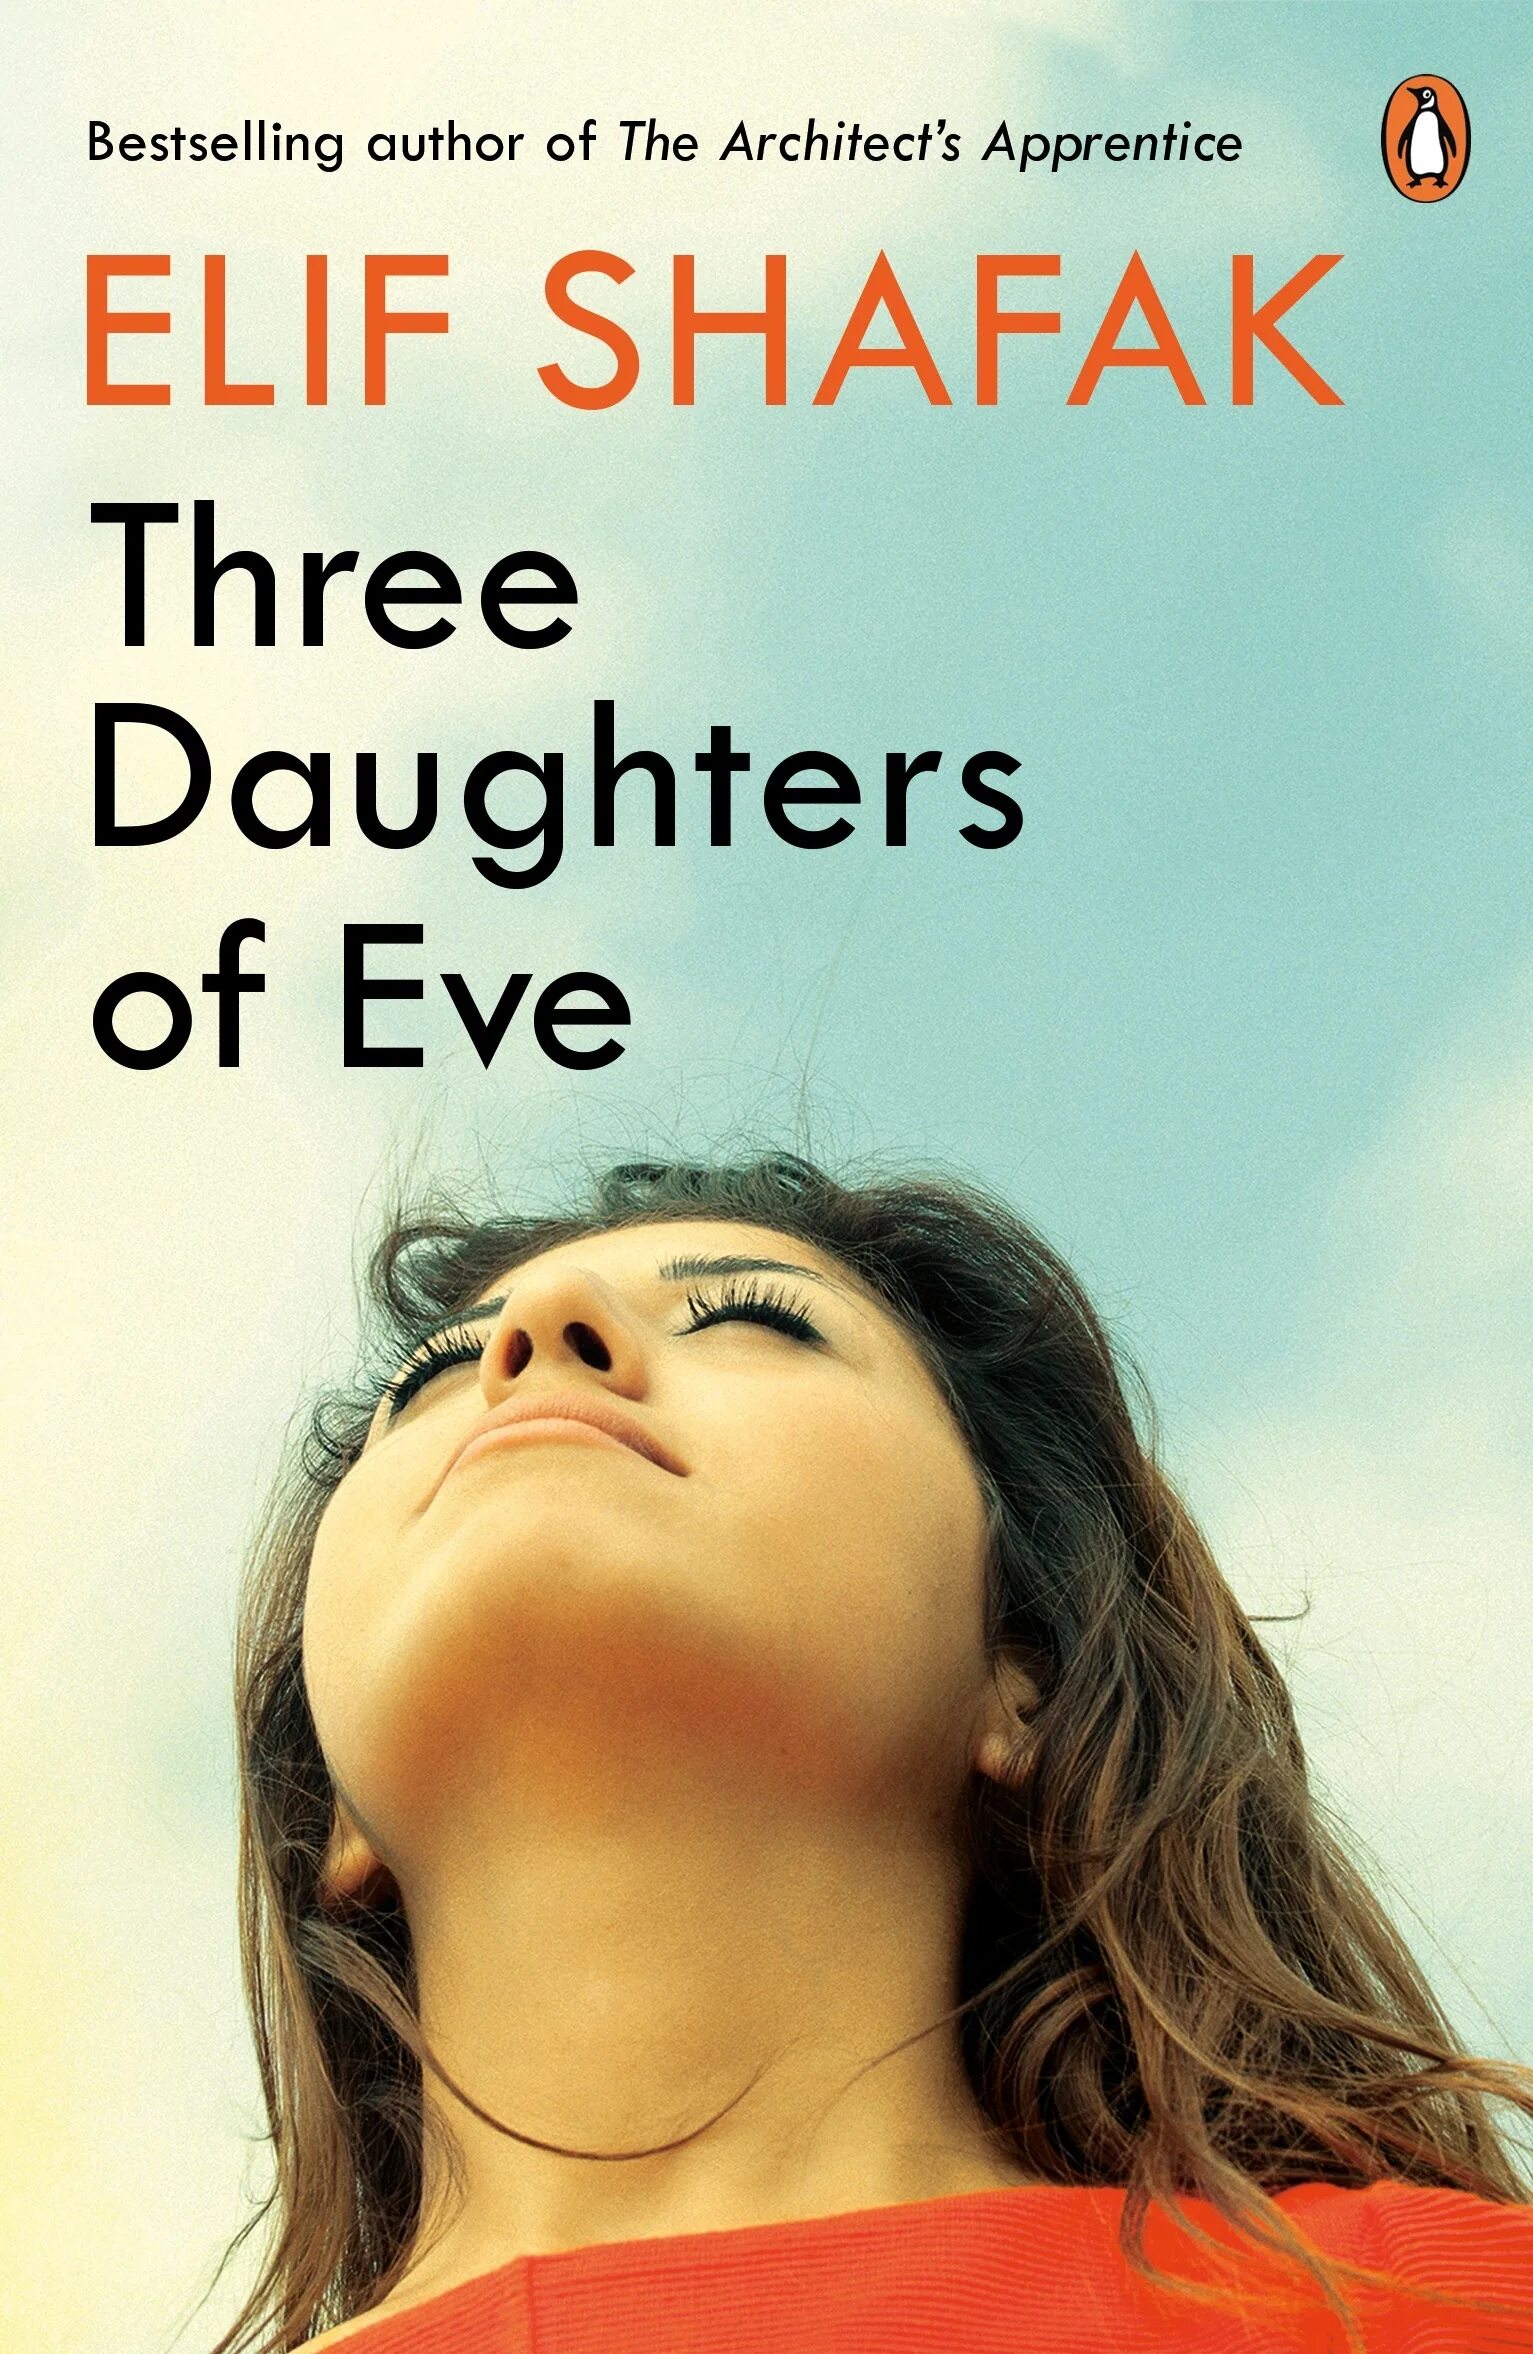 The daughters of eve. The daughters of Eve фото. Elif Shafak books. "The daughters of Eve" && ( исполнитель | группа | музыка | Music | Band | artist ) && (фото | photo).